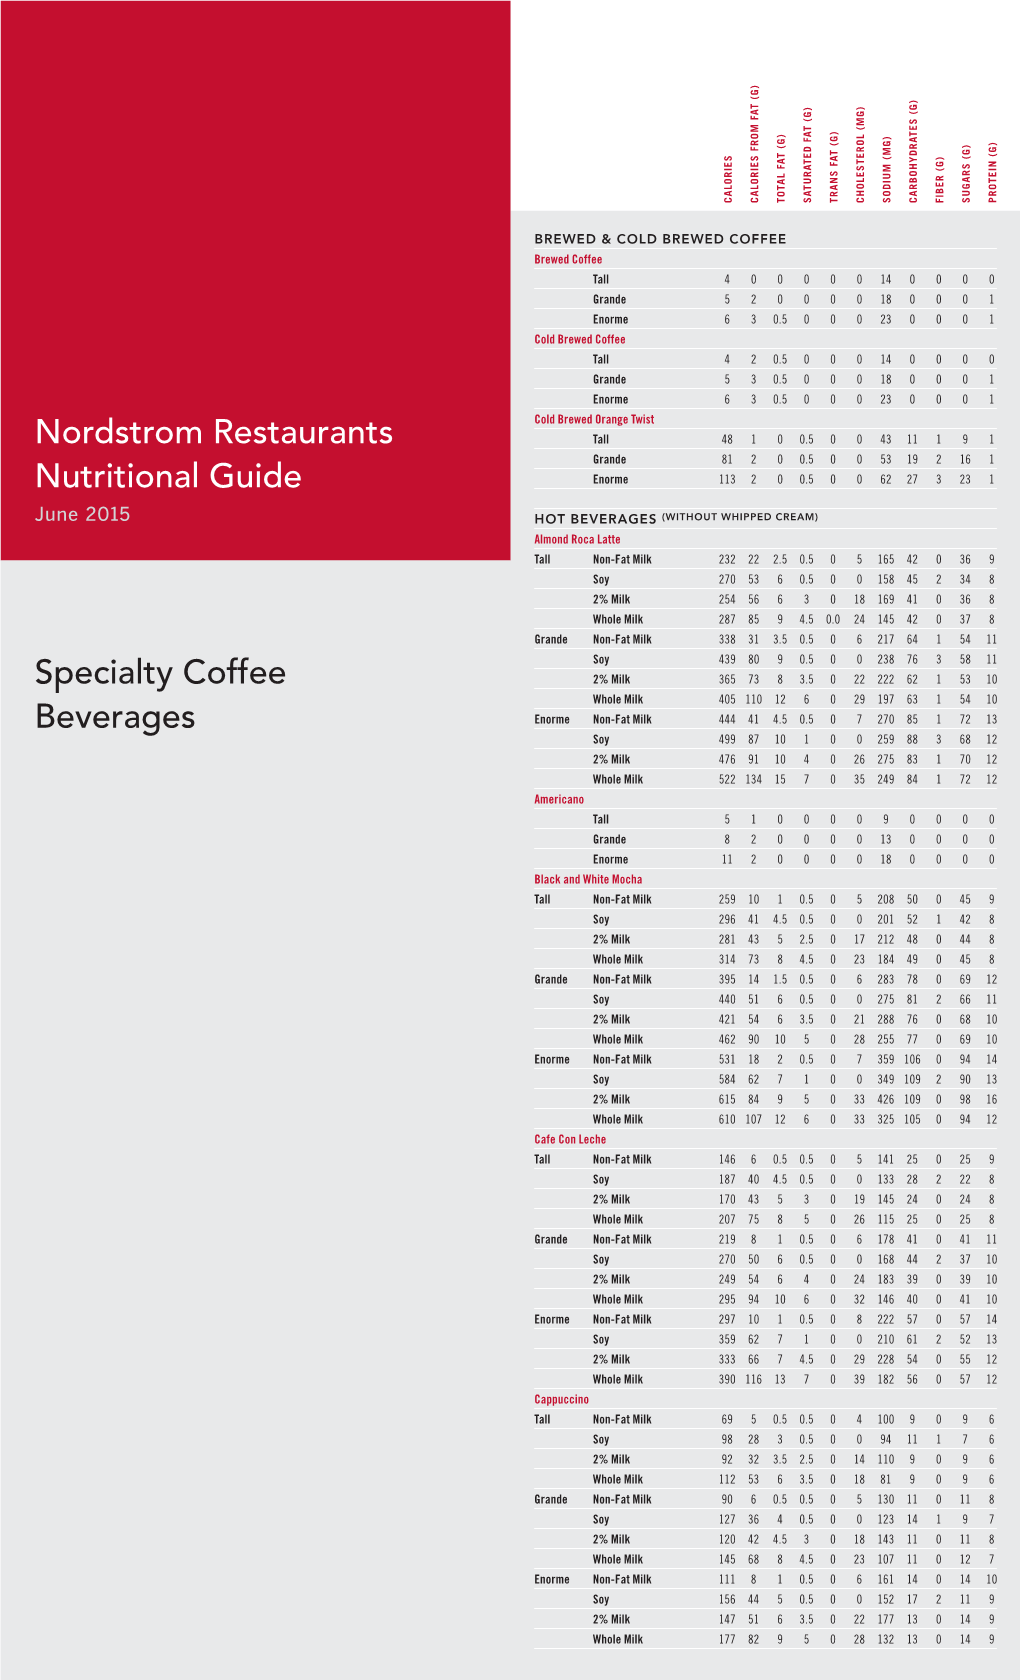 Specialty Coffee Beverages Nordstrom Restaurants Nutritional